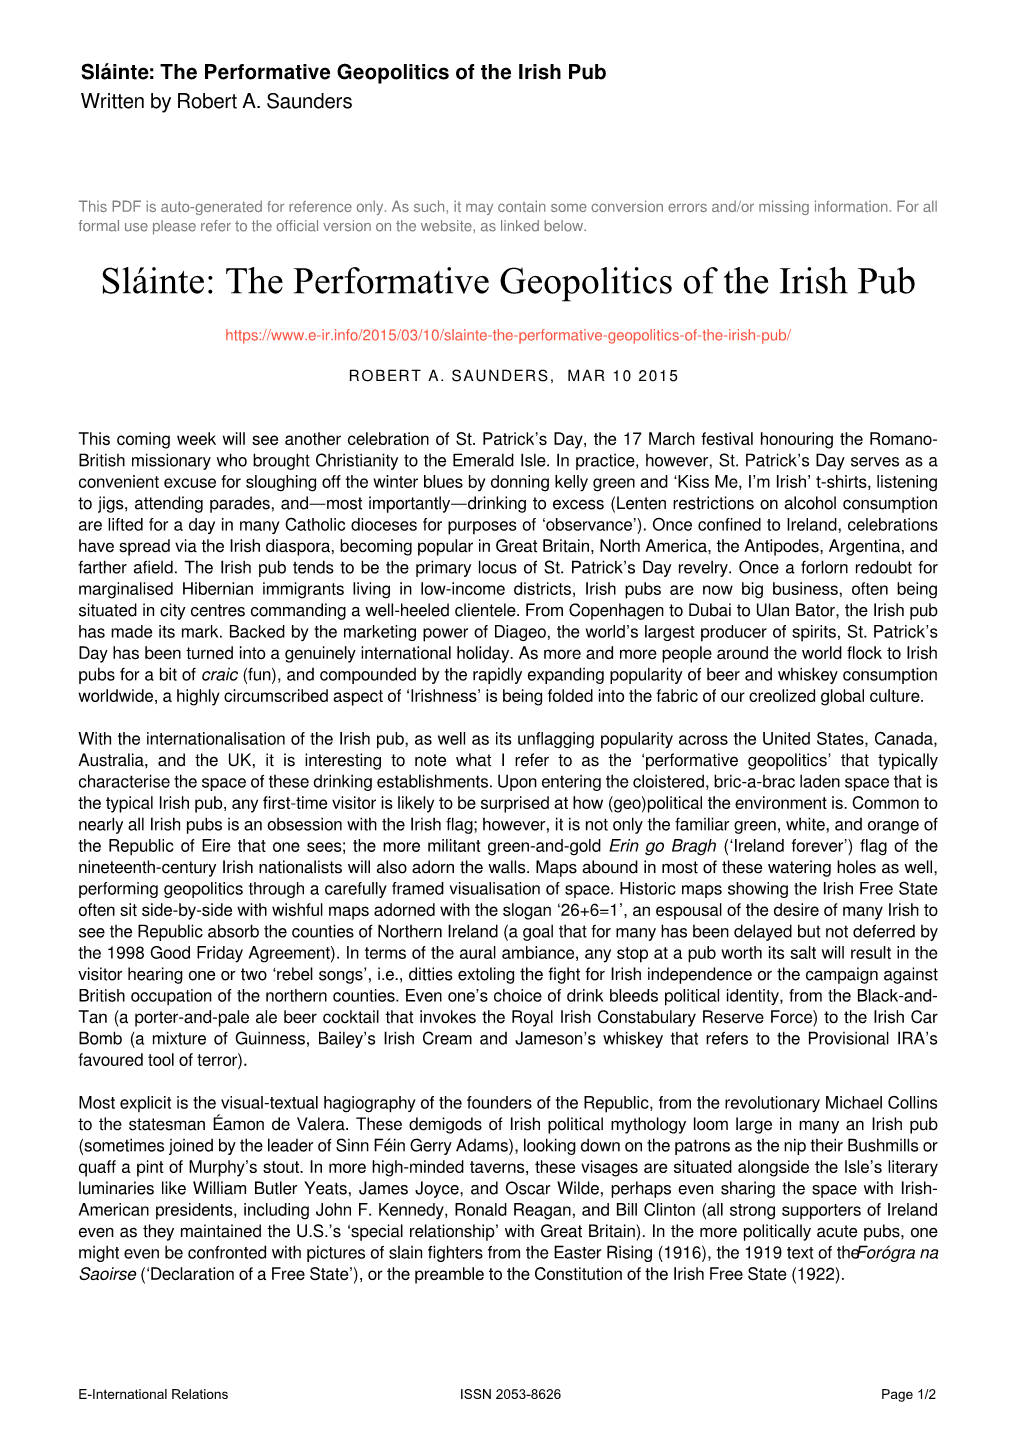 The Performative Geopolitics of the Irish Pub Written by Robert A